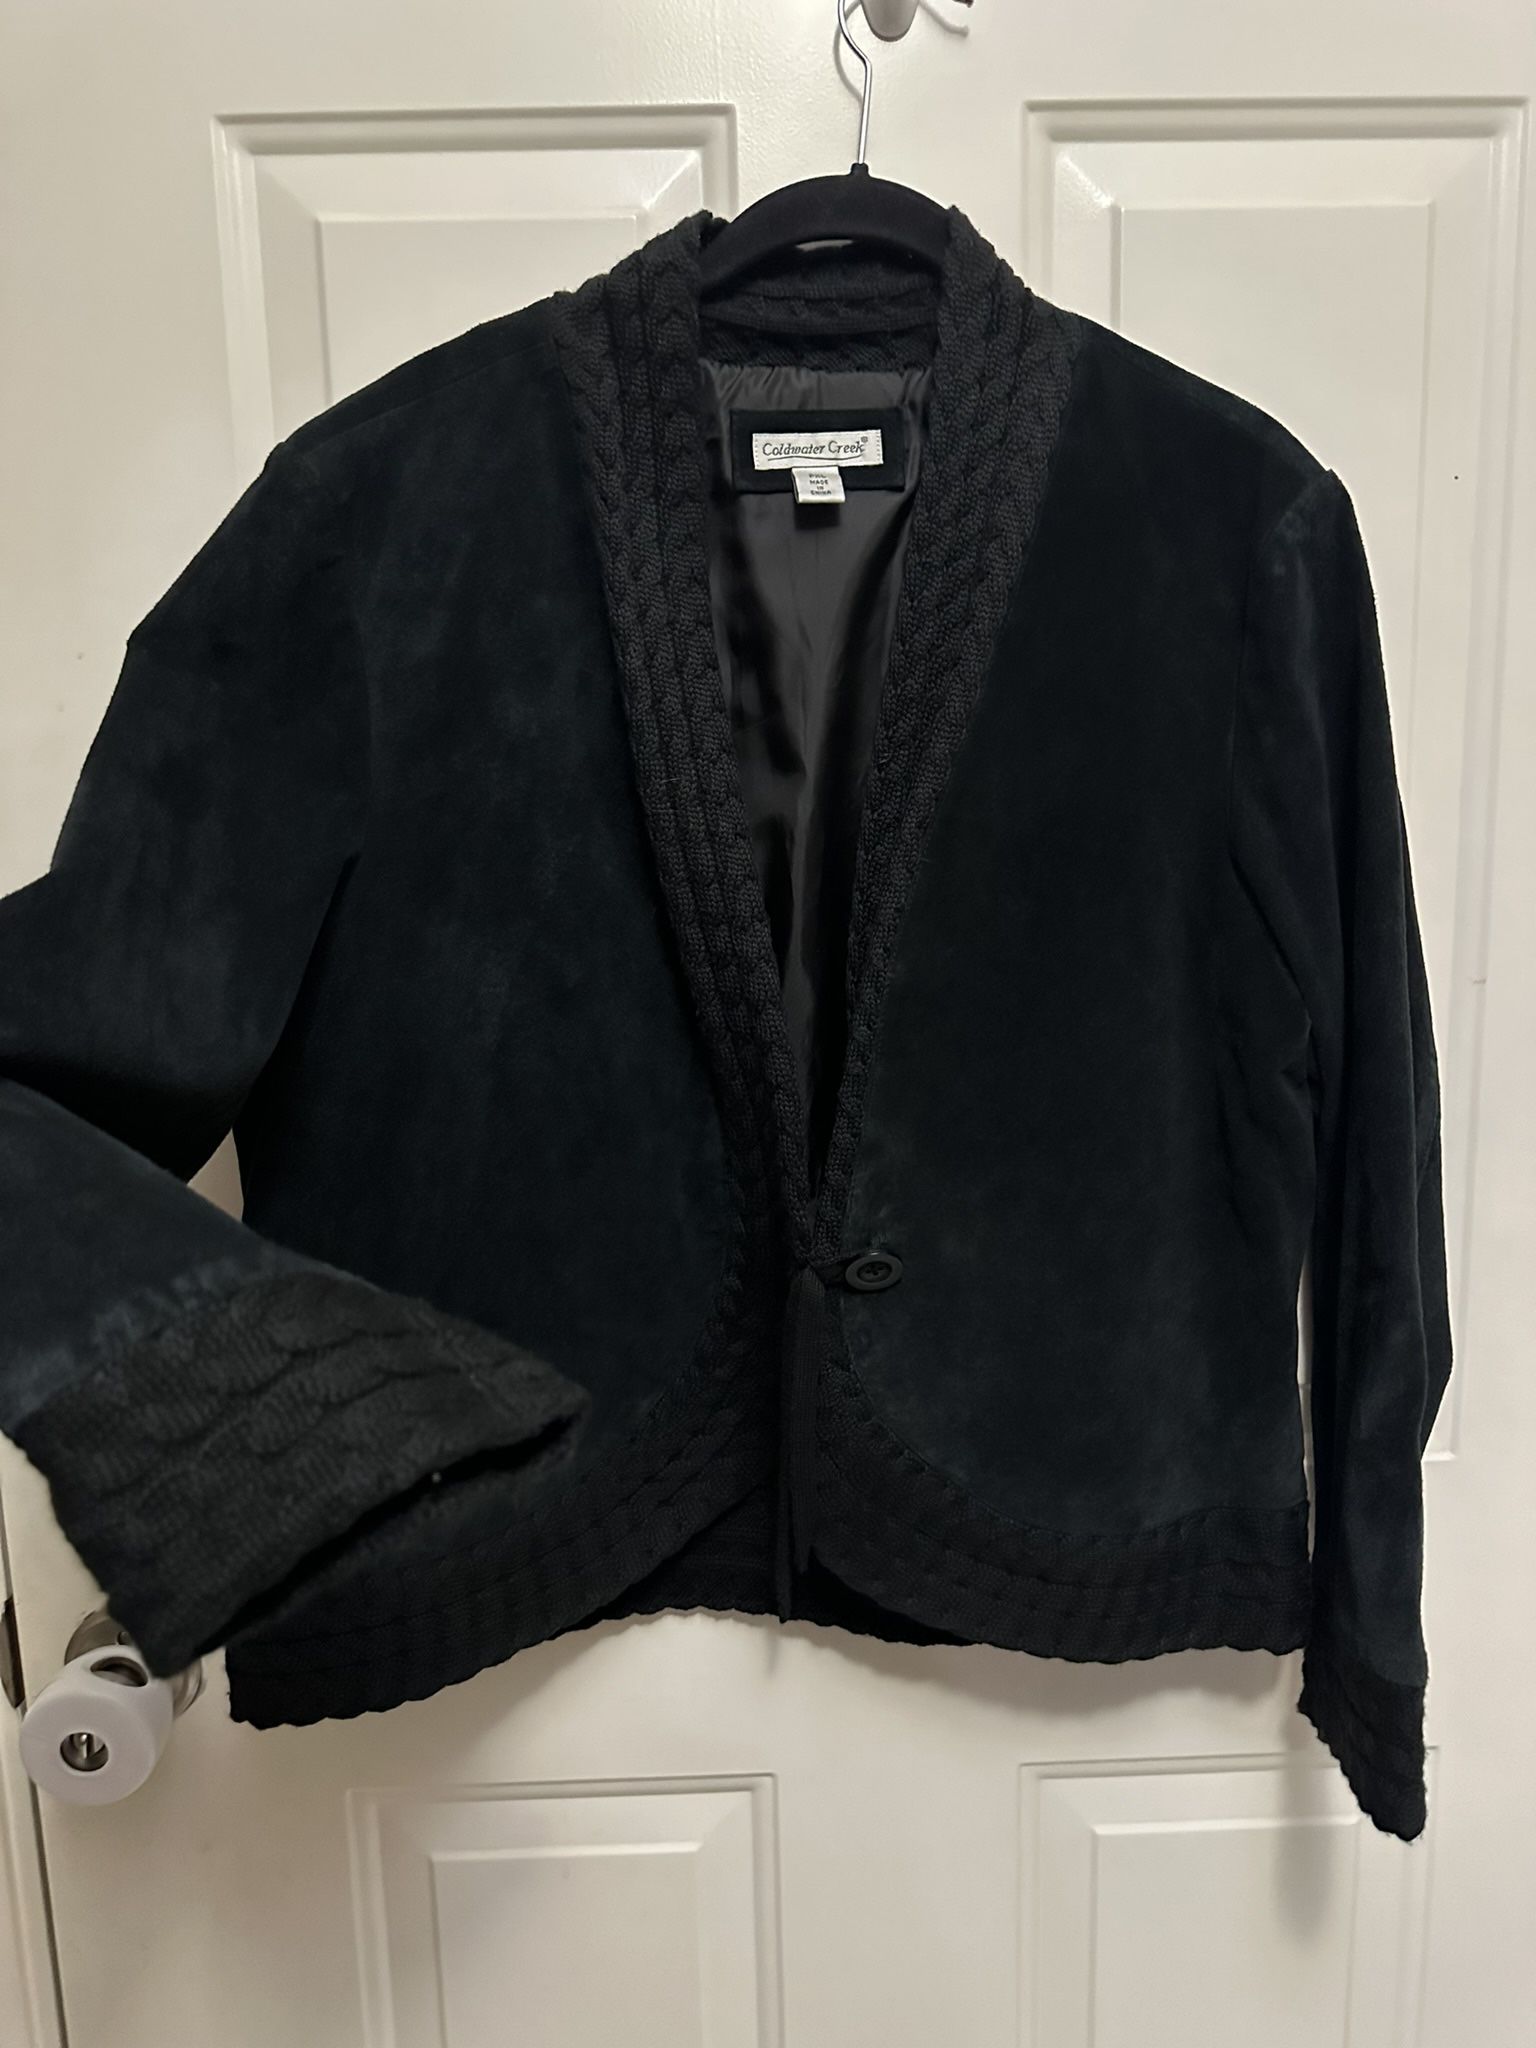 Western Themed Women’s Jackets, Vest, Shirt, and Belt